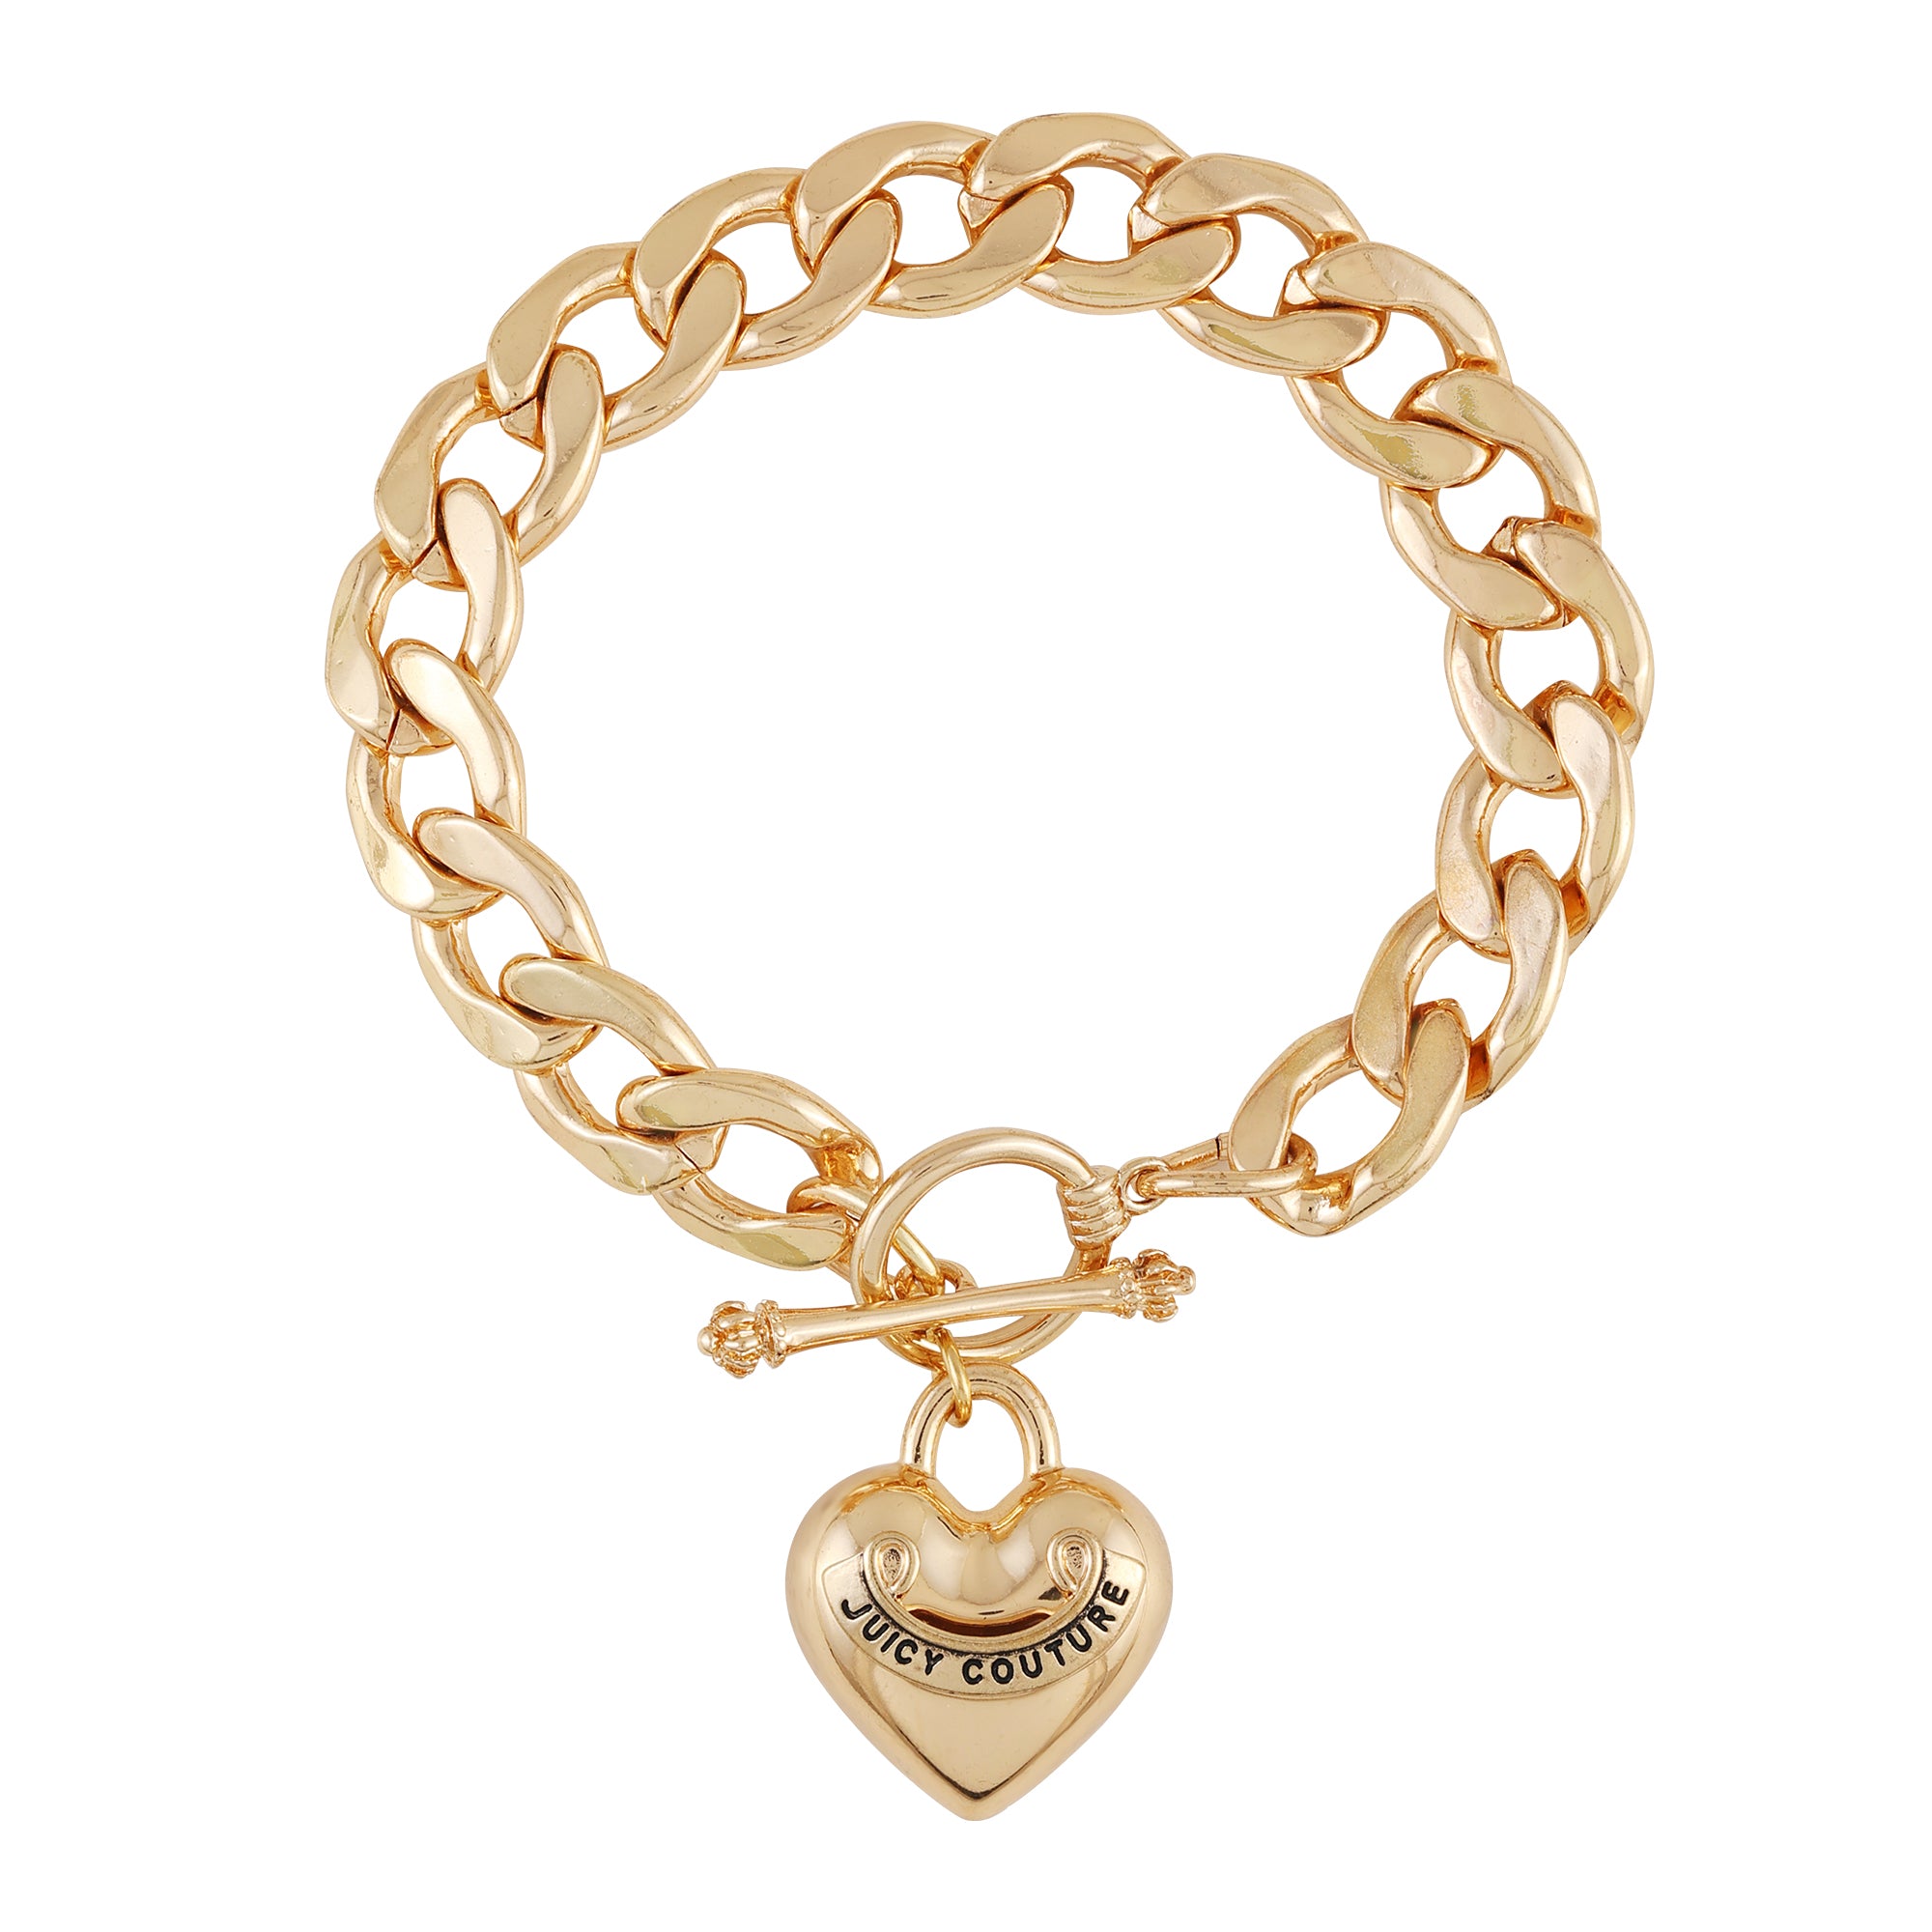 Mavin  JUICY COUTURE gold tone heart j charm bracelet viva la juicy charm